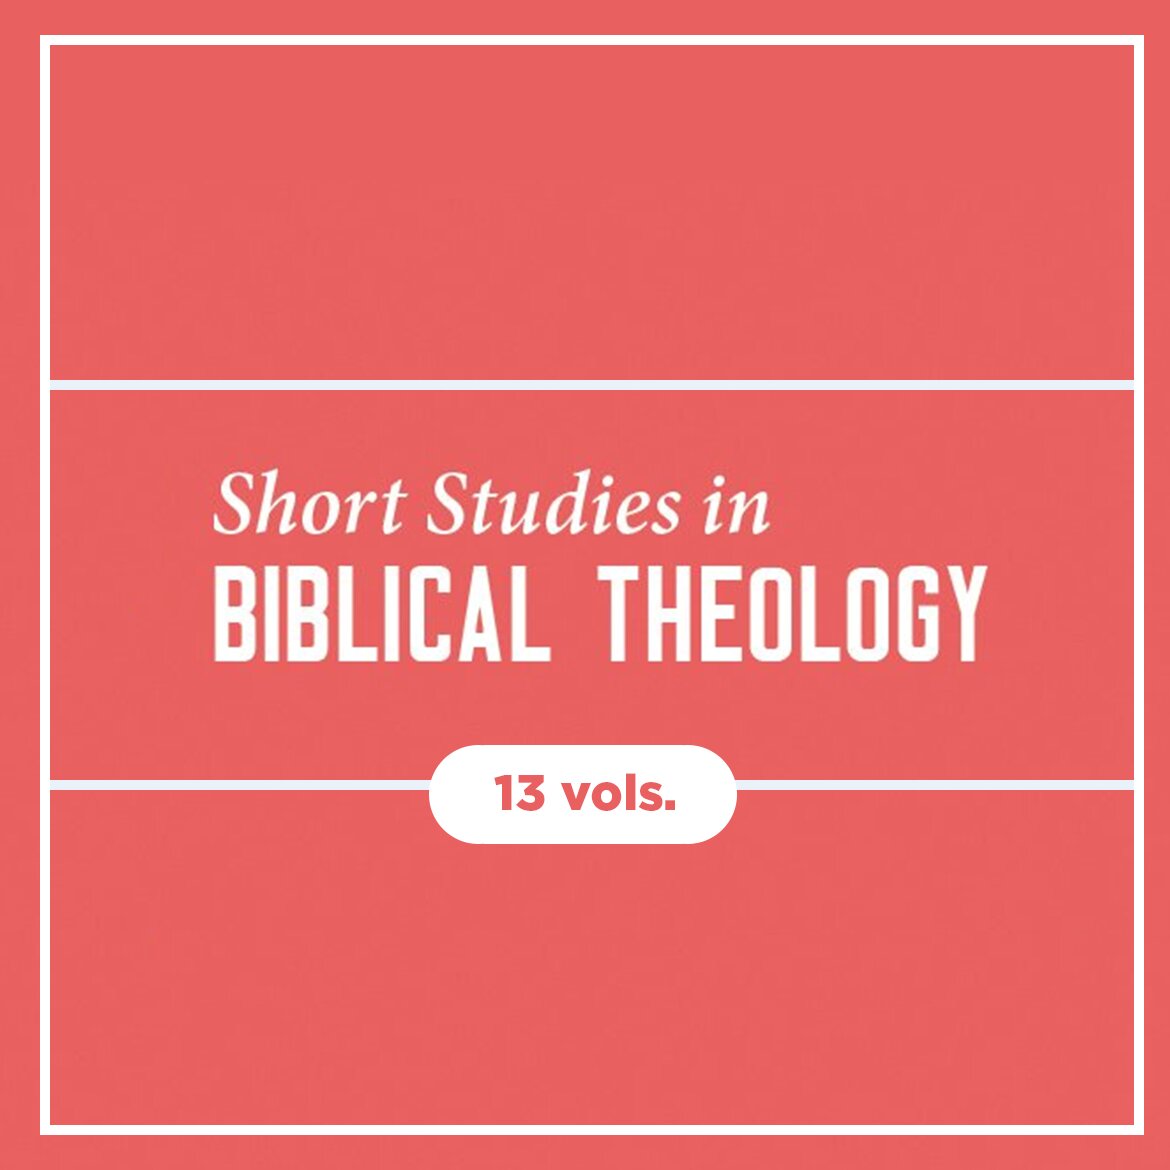 Short Studies in Biblical Theology (13 vols.)